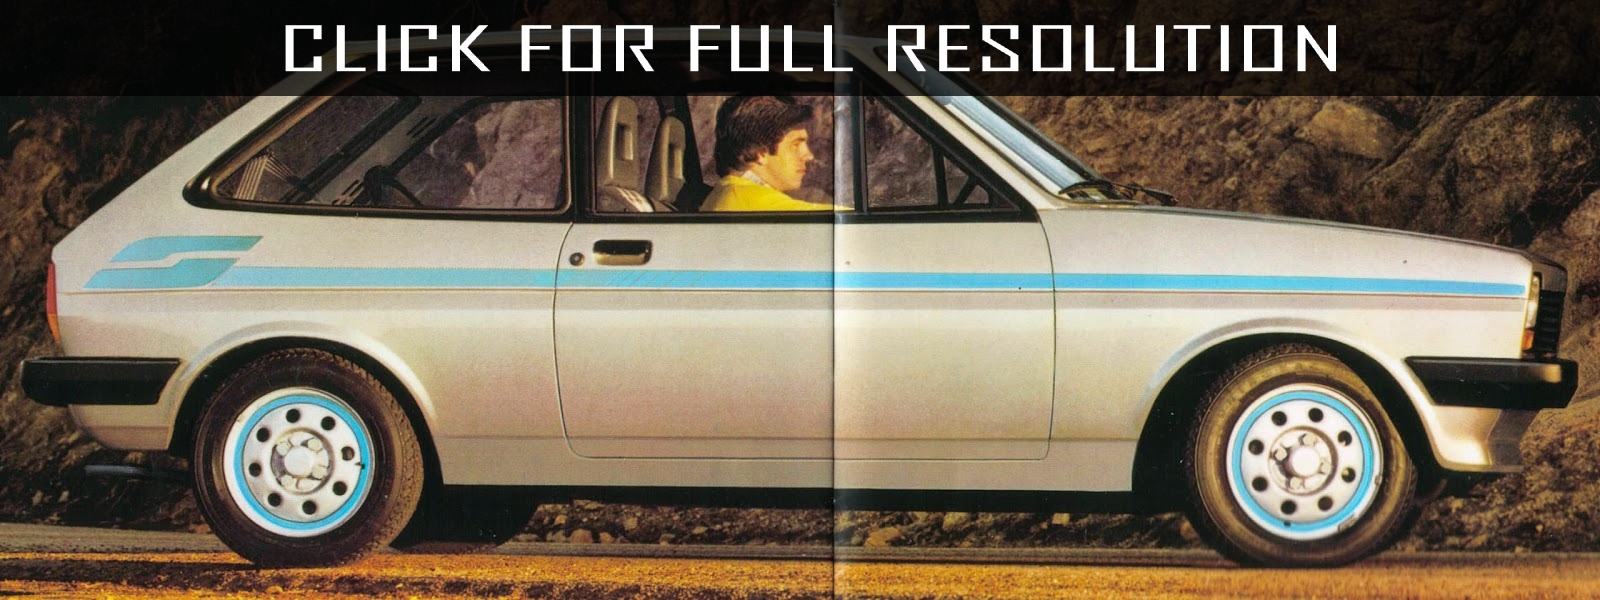 1982 Ford Fiesta